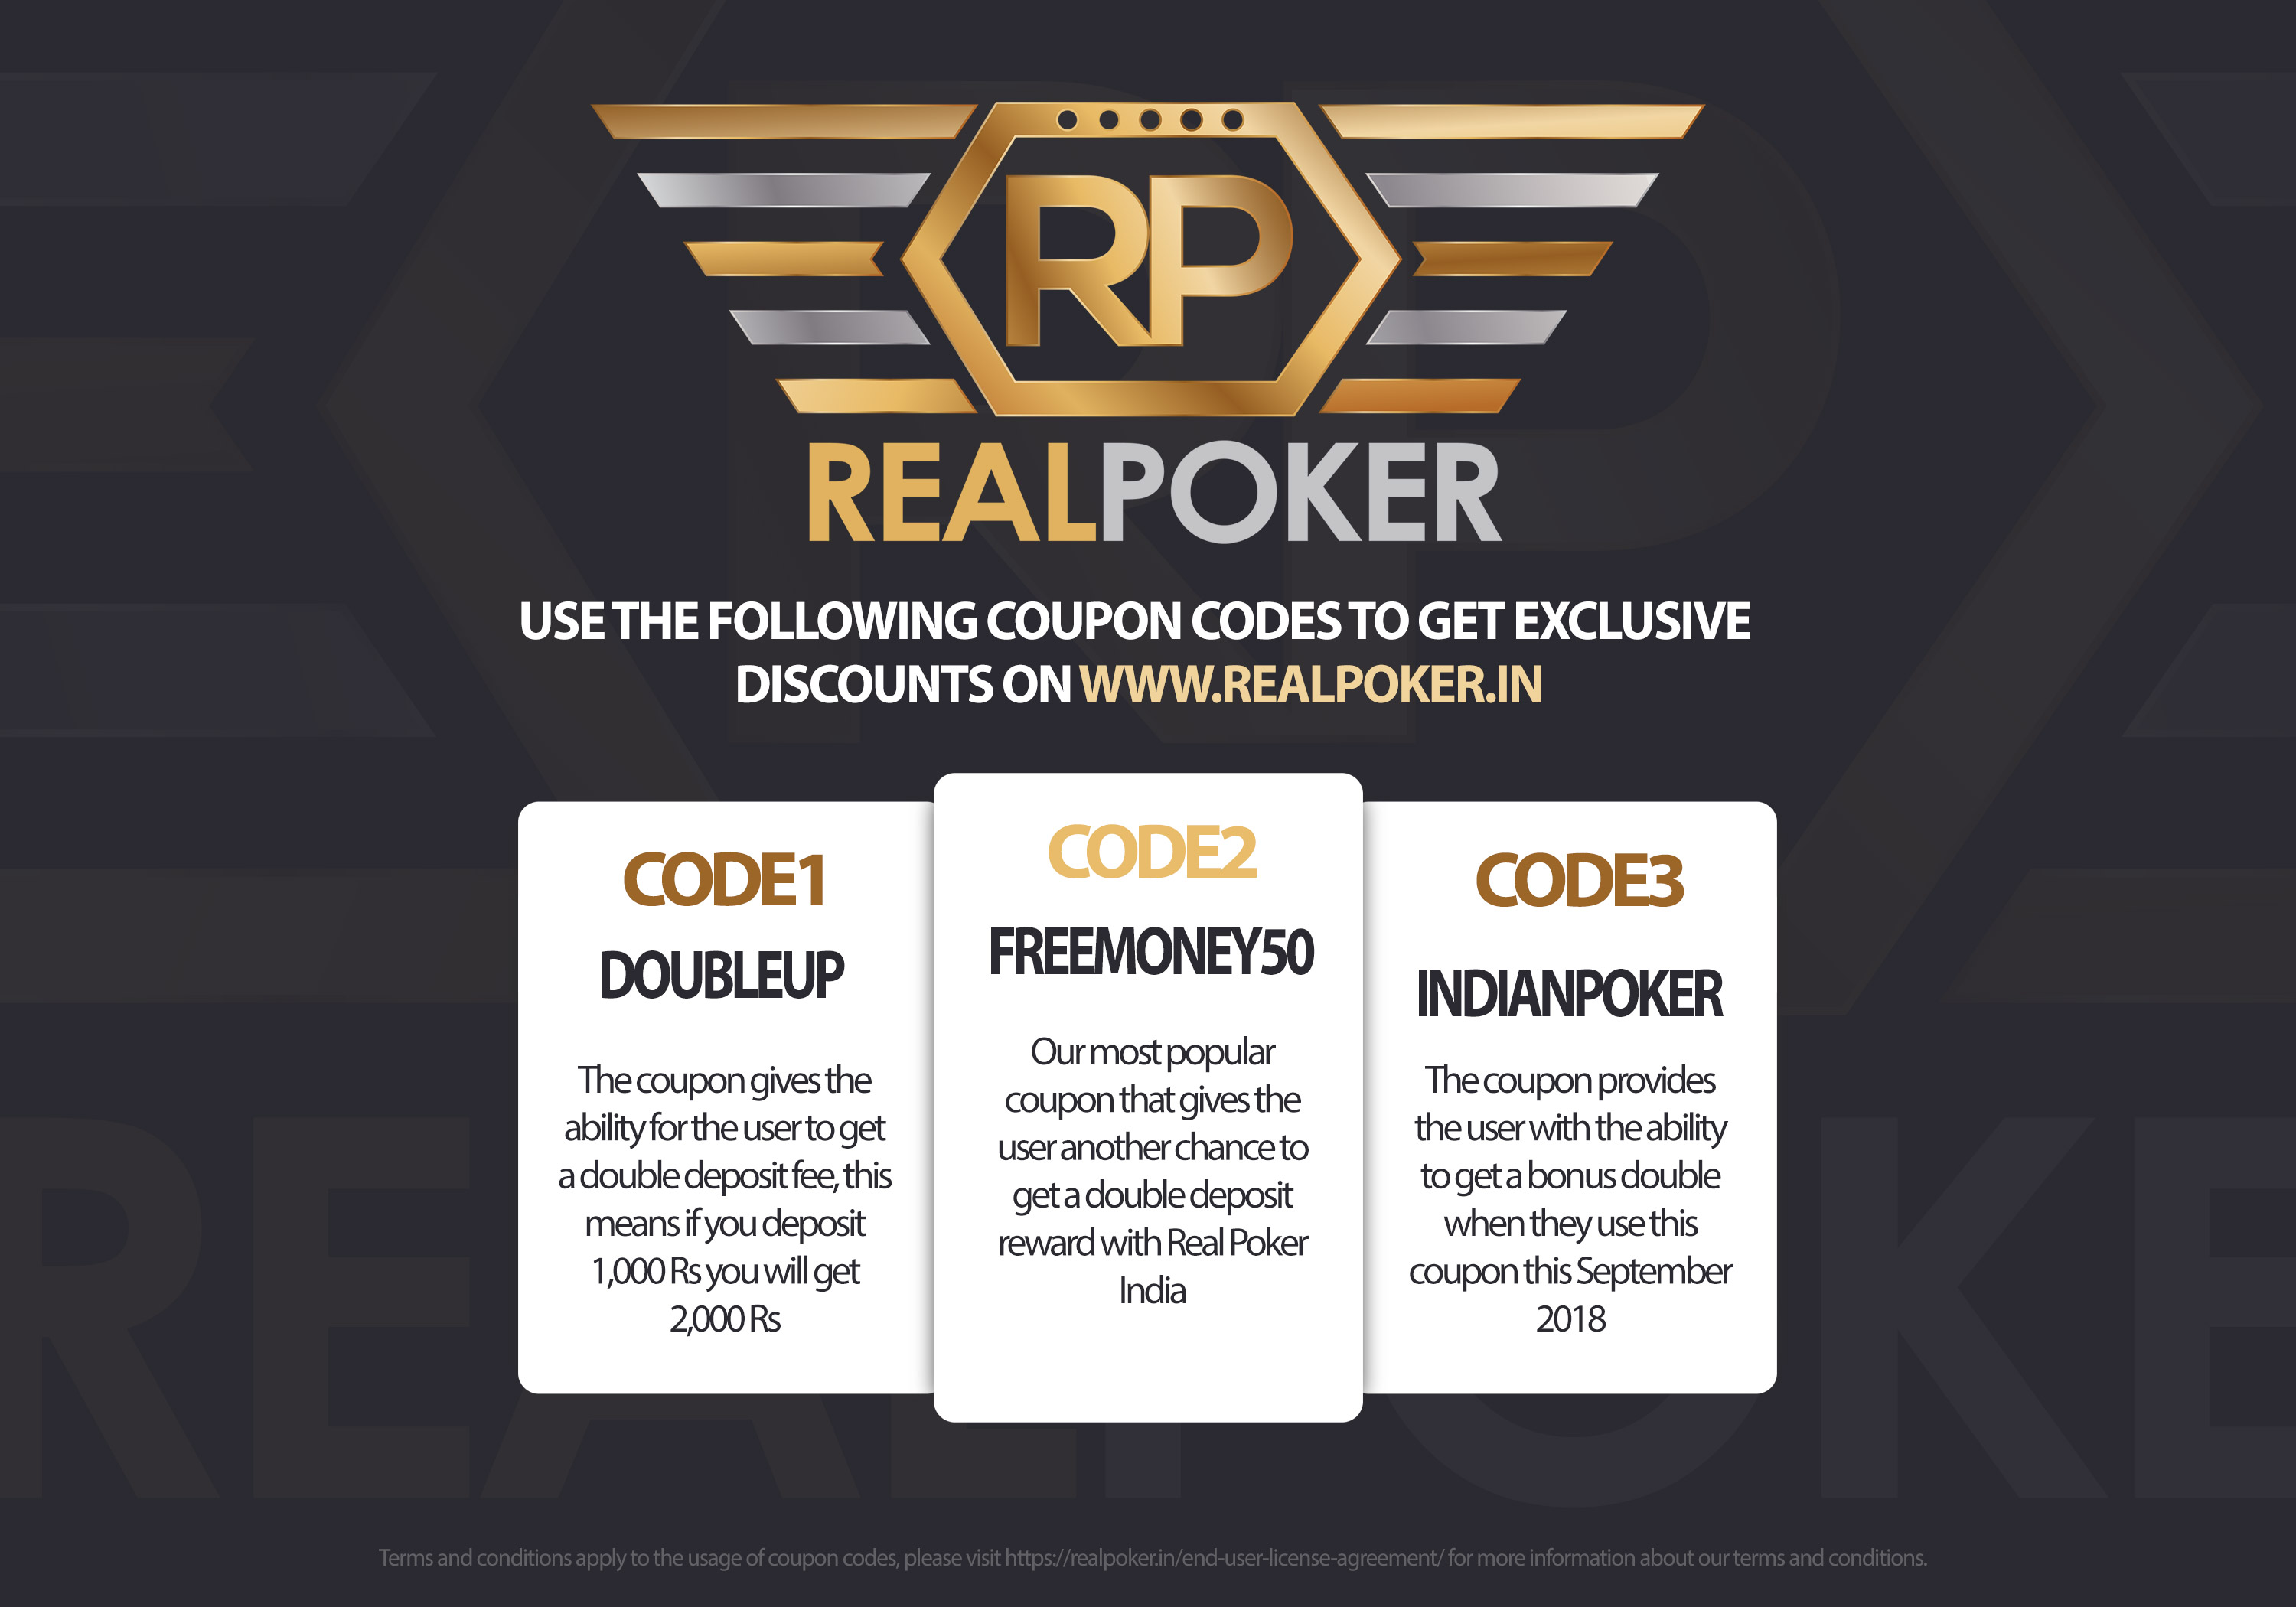 monopoly poker coupon code